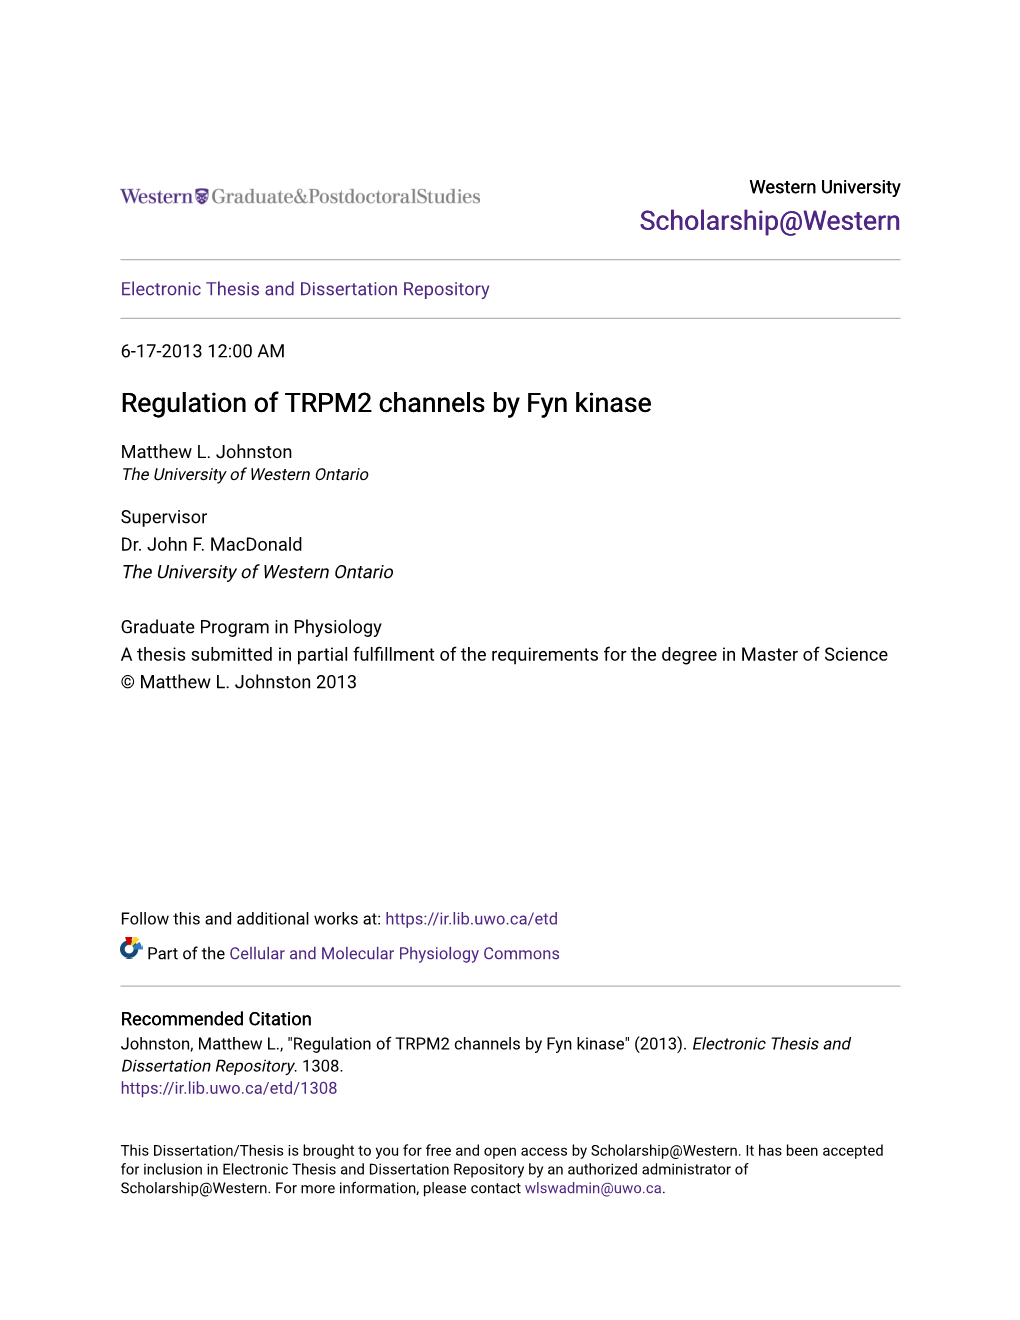 Regulation of TRPM2 Channels by Fyn Kinase